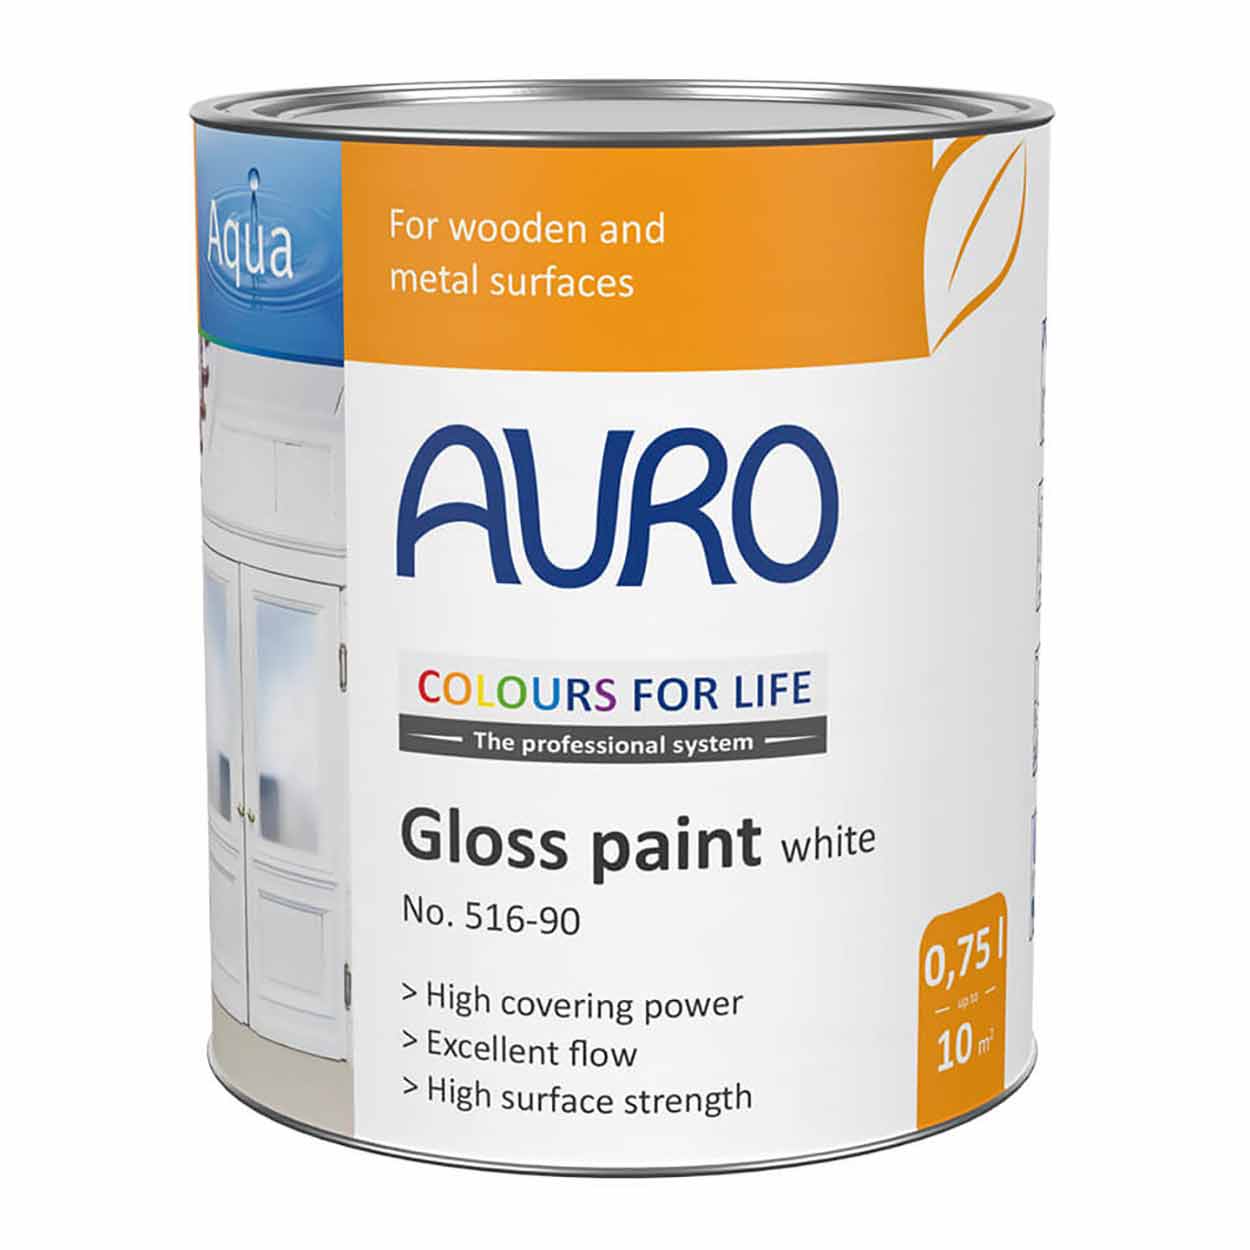 Auro Natural Gloss Paint for Wood - WHITE - Interior & Exterior - Auro 516